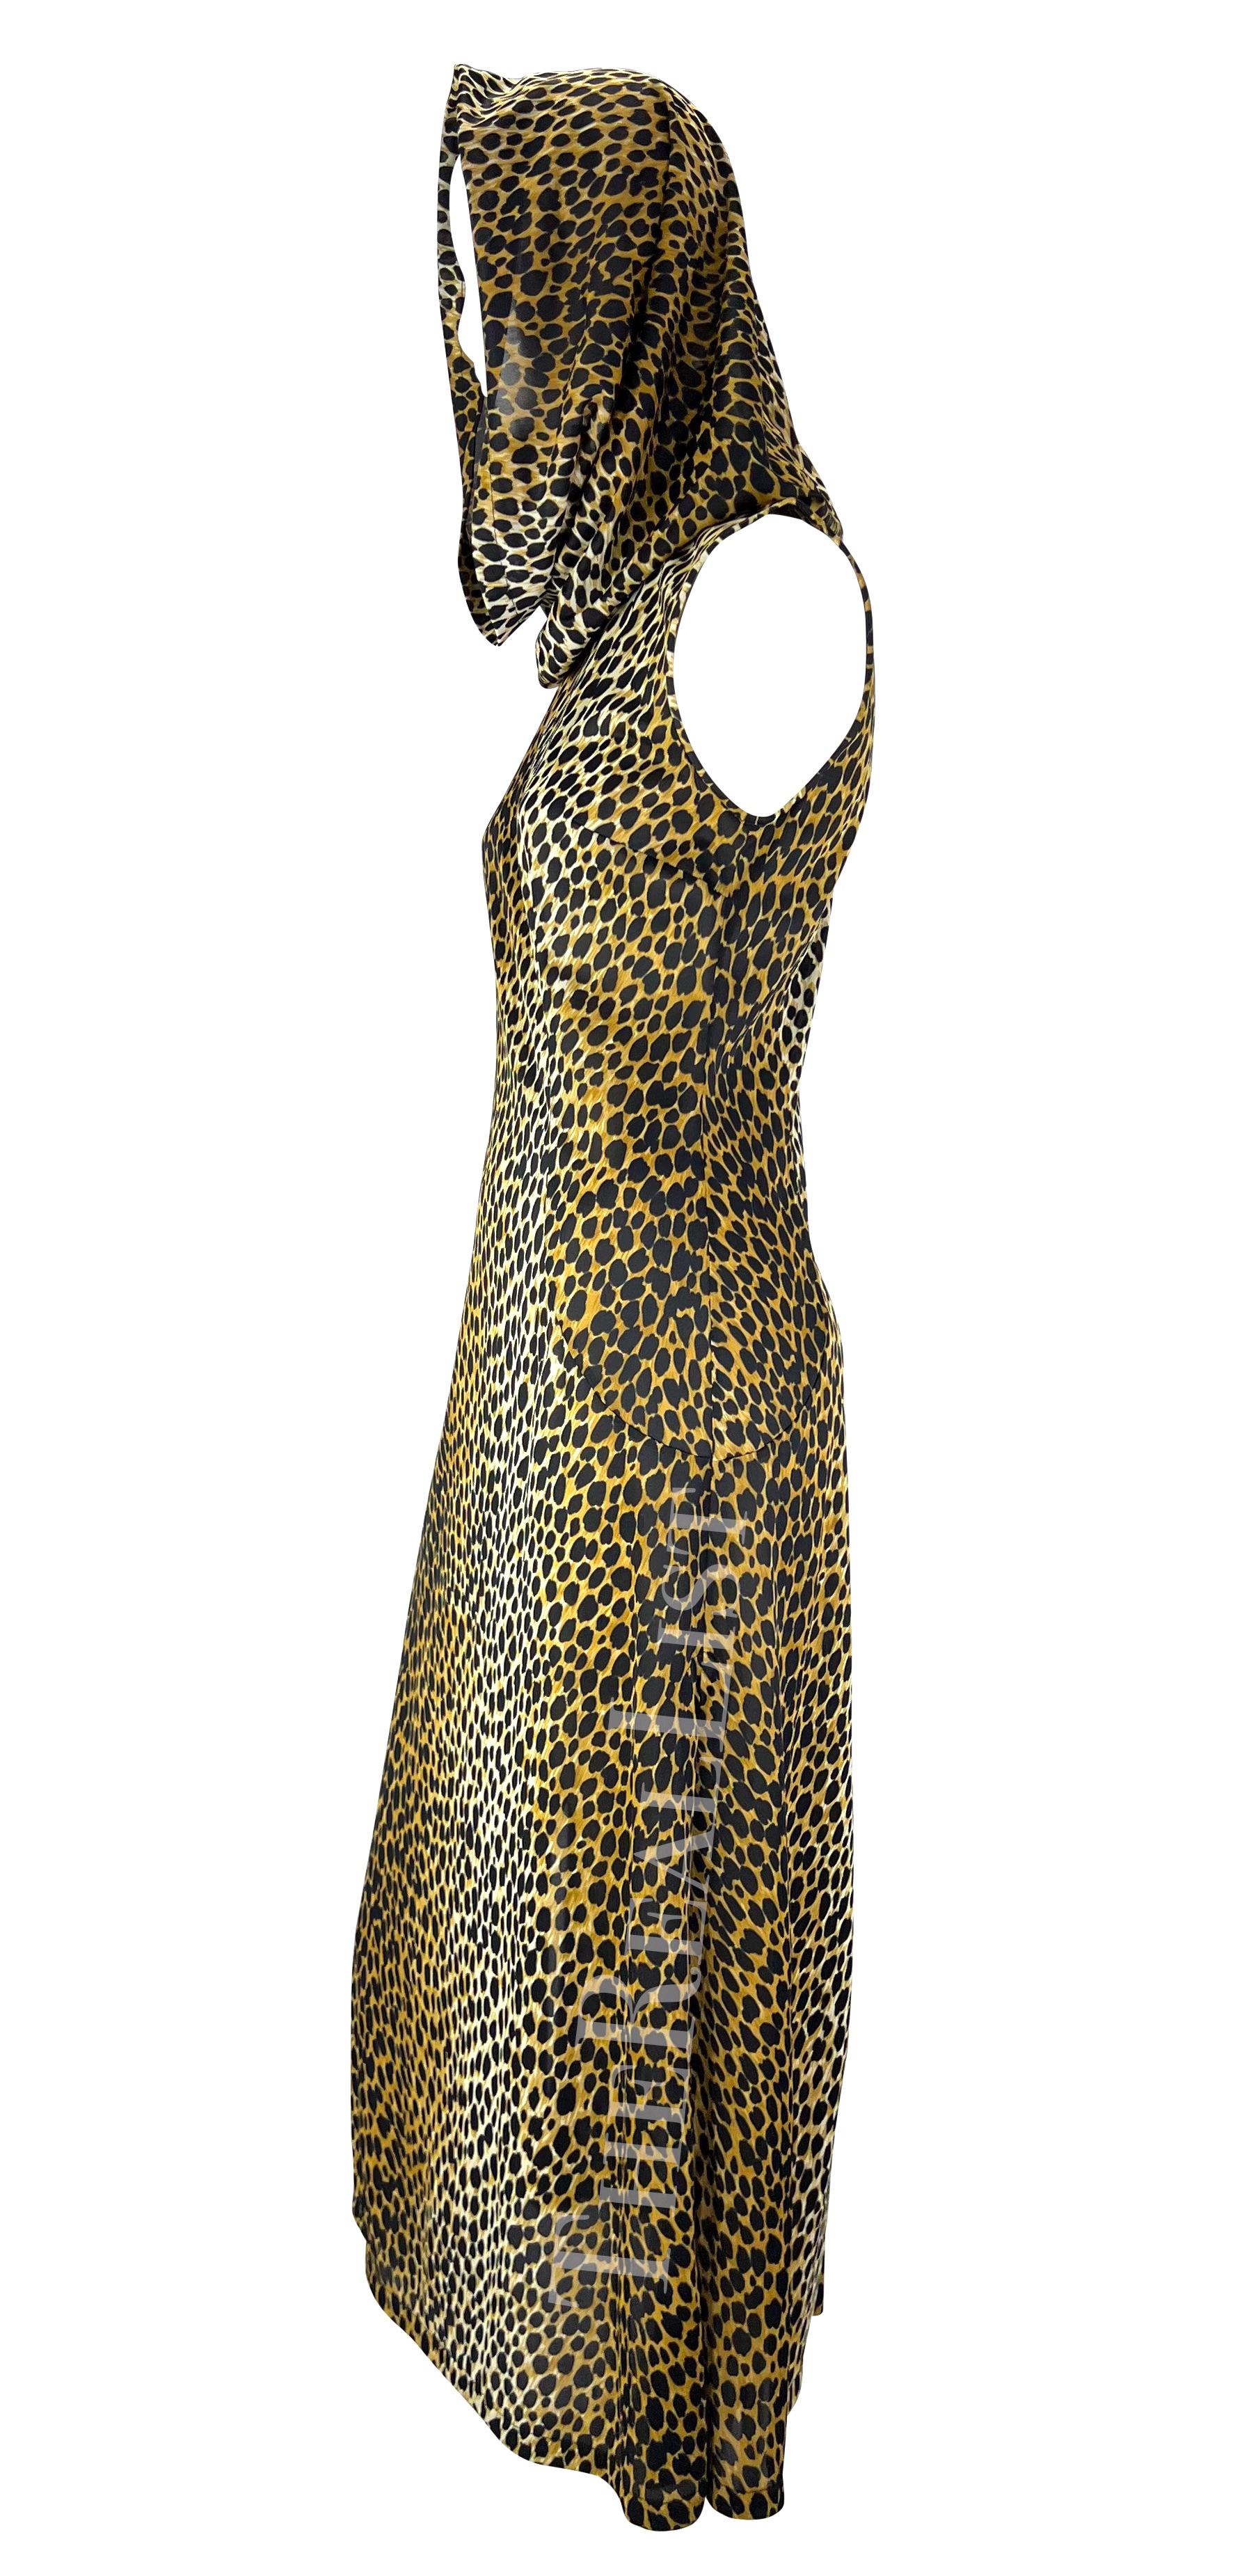 S/S 1996 Dolce & Gabbana Hooded Stretch Leopard Print Hit Slit Dress For Sale 2